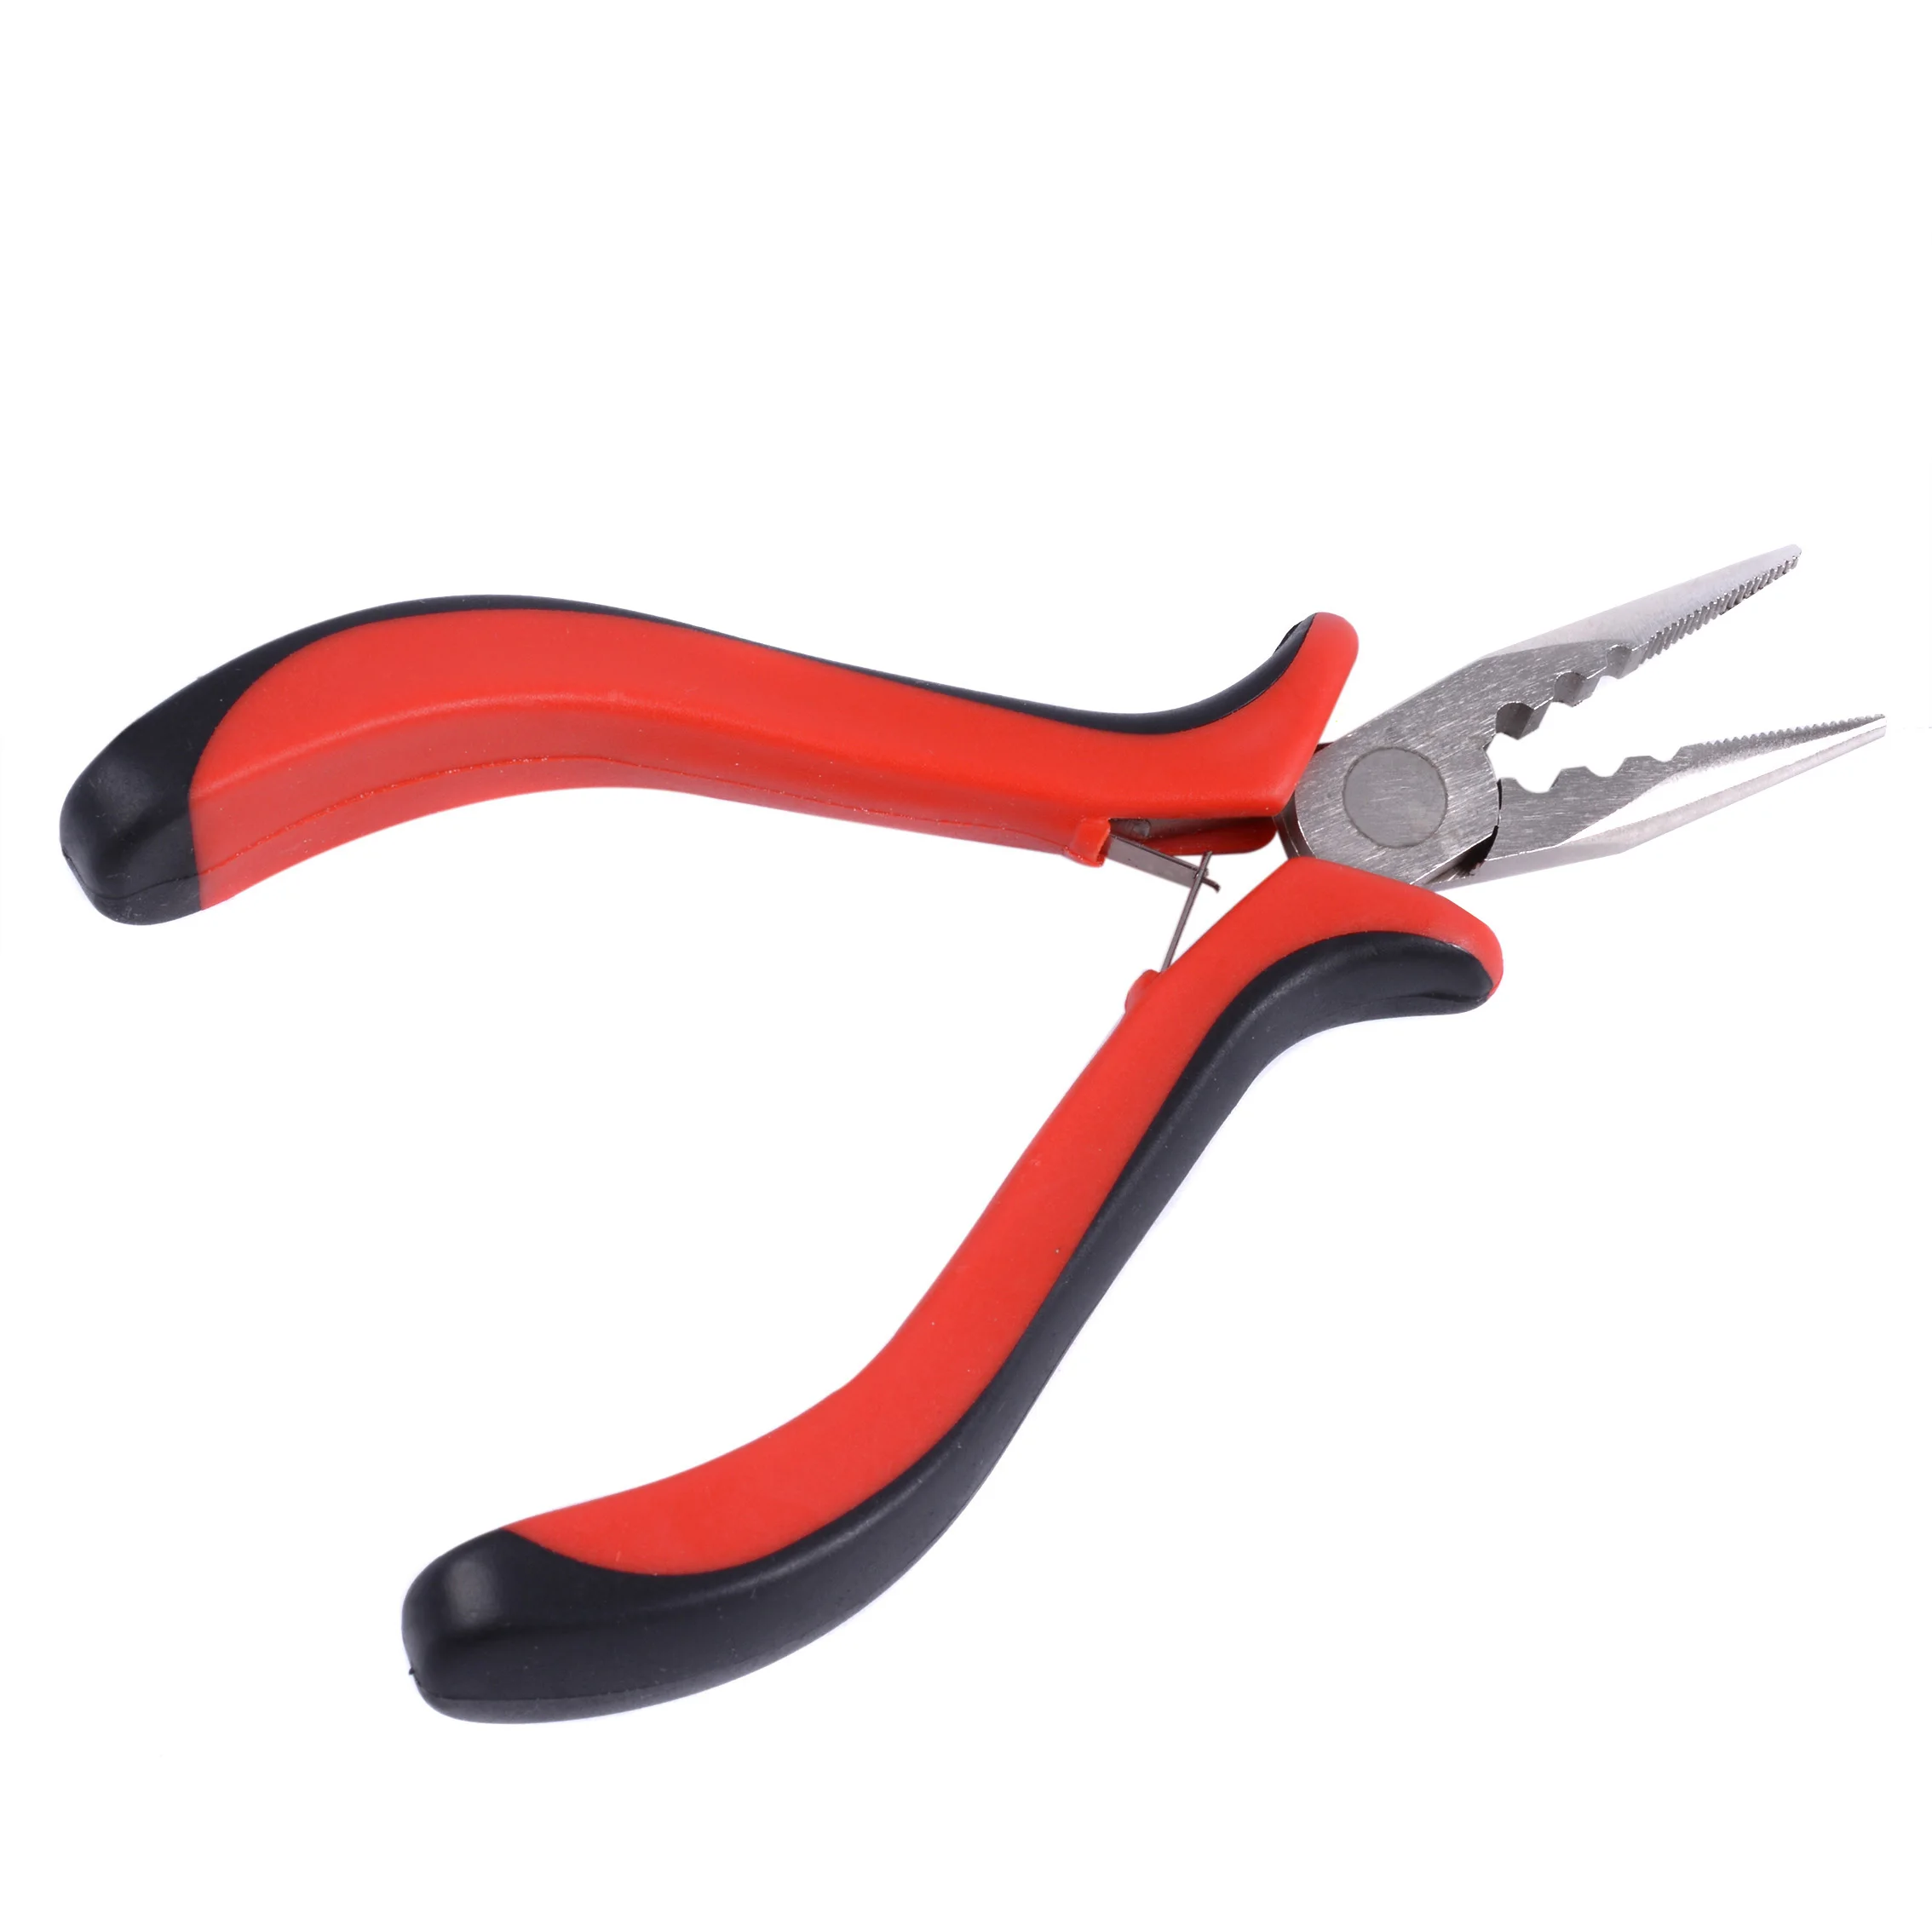 Micro Link Kit Matte Black Hair Extension Tool Kit Hair Pliers Extension  Tool For Salon - AliExpress